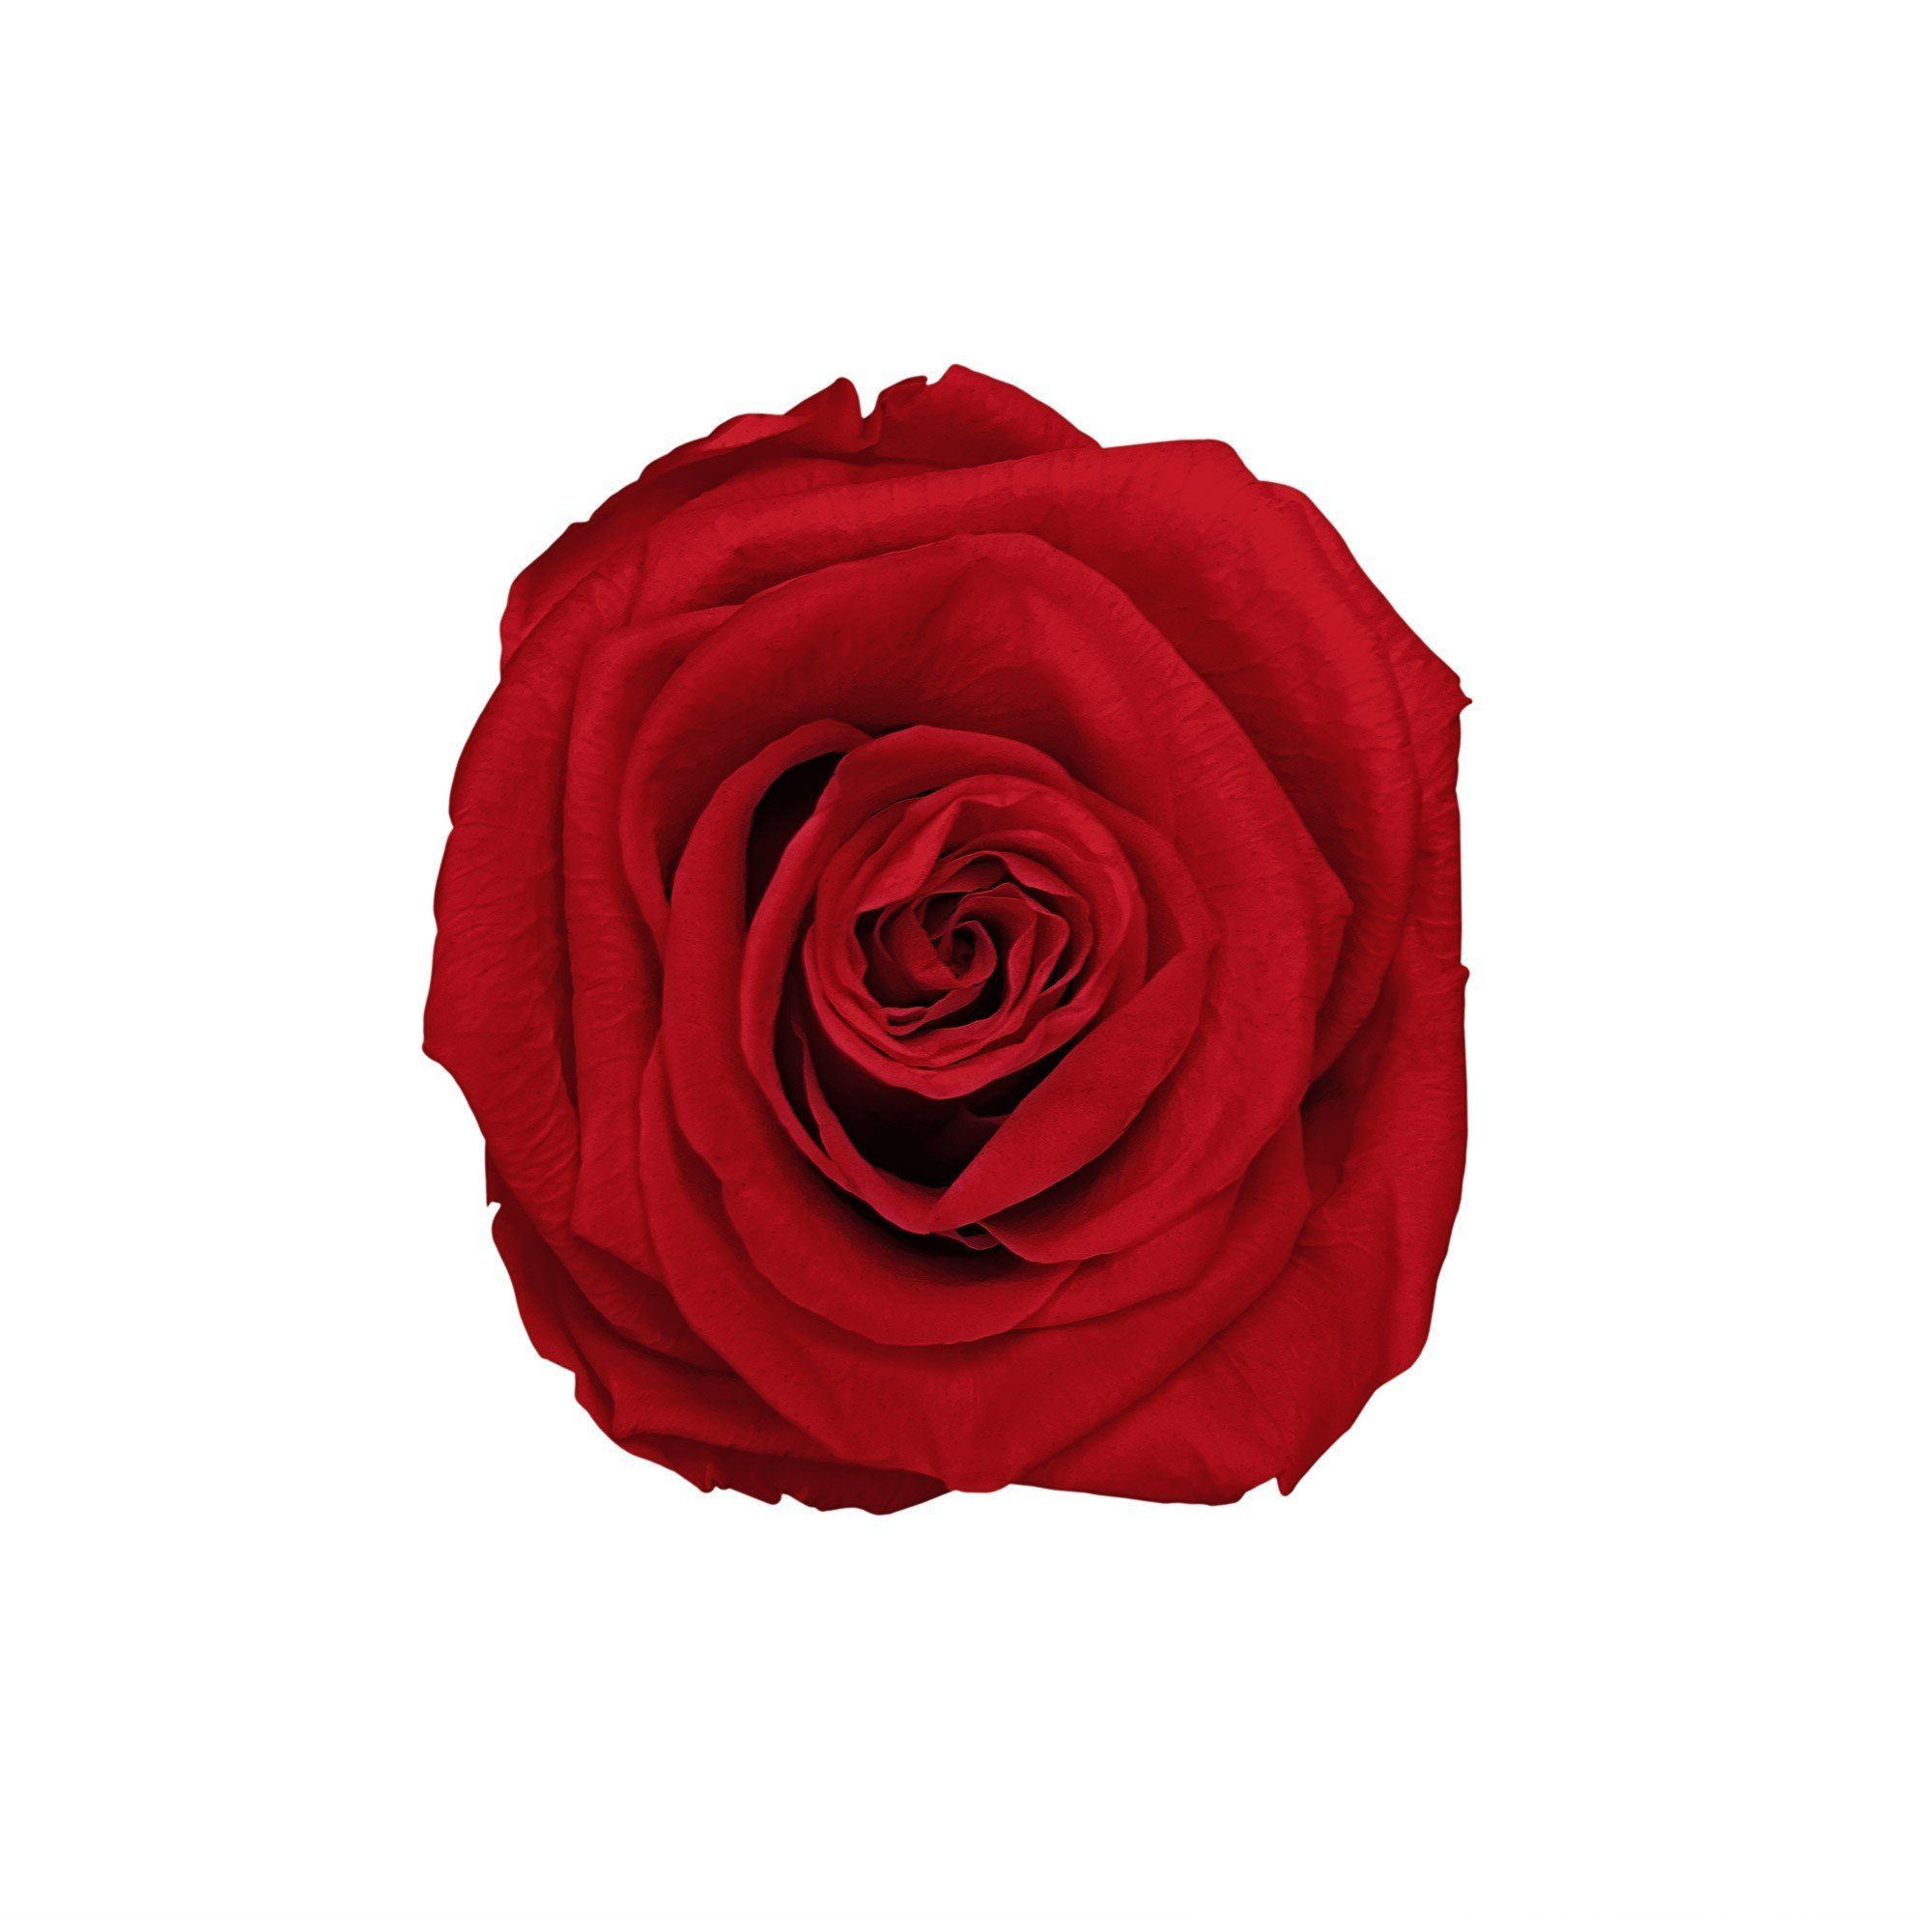 Kunstblume Runde Rosenbox Infinity Holy Höhe in Rose, Richter duftende Infinity I cm Flowers, I I haltbar Heritage Rose konservierte mit 1er Jahre 3 by Blumen weiß Raul 9 Red Echte